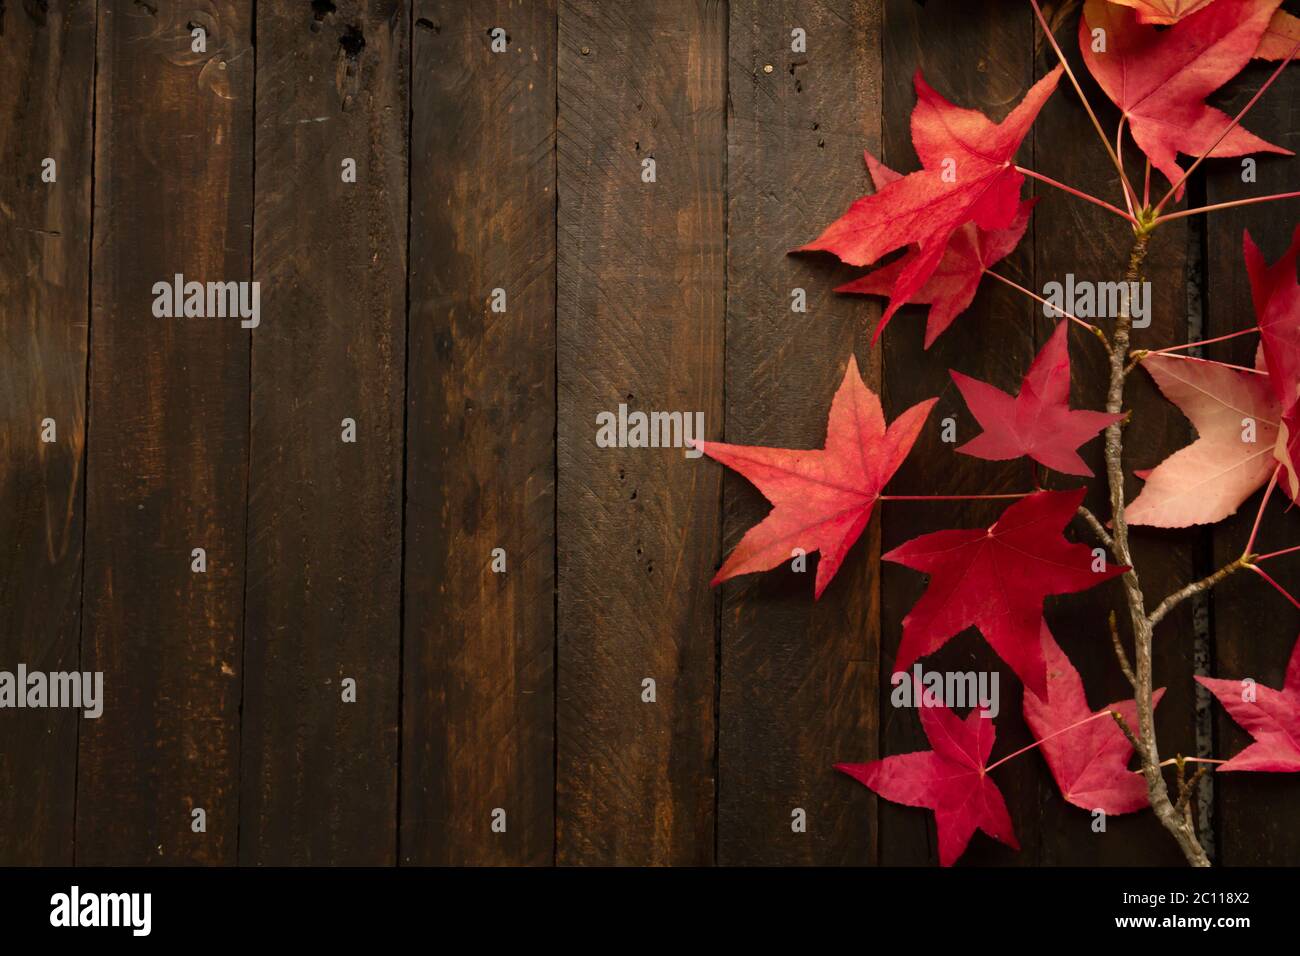 Liquidambar colorful autumnal leaves on dark wooden rustic barckdrop Stock Photo